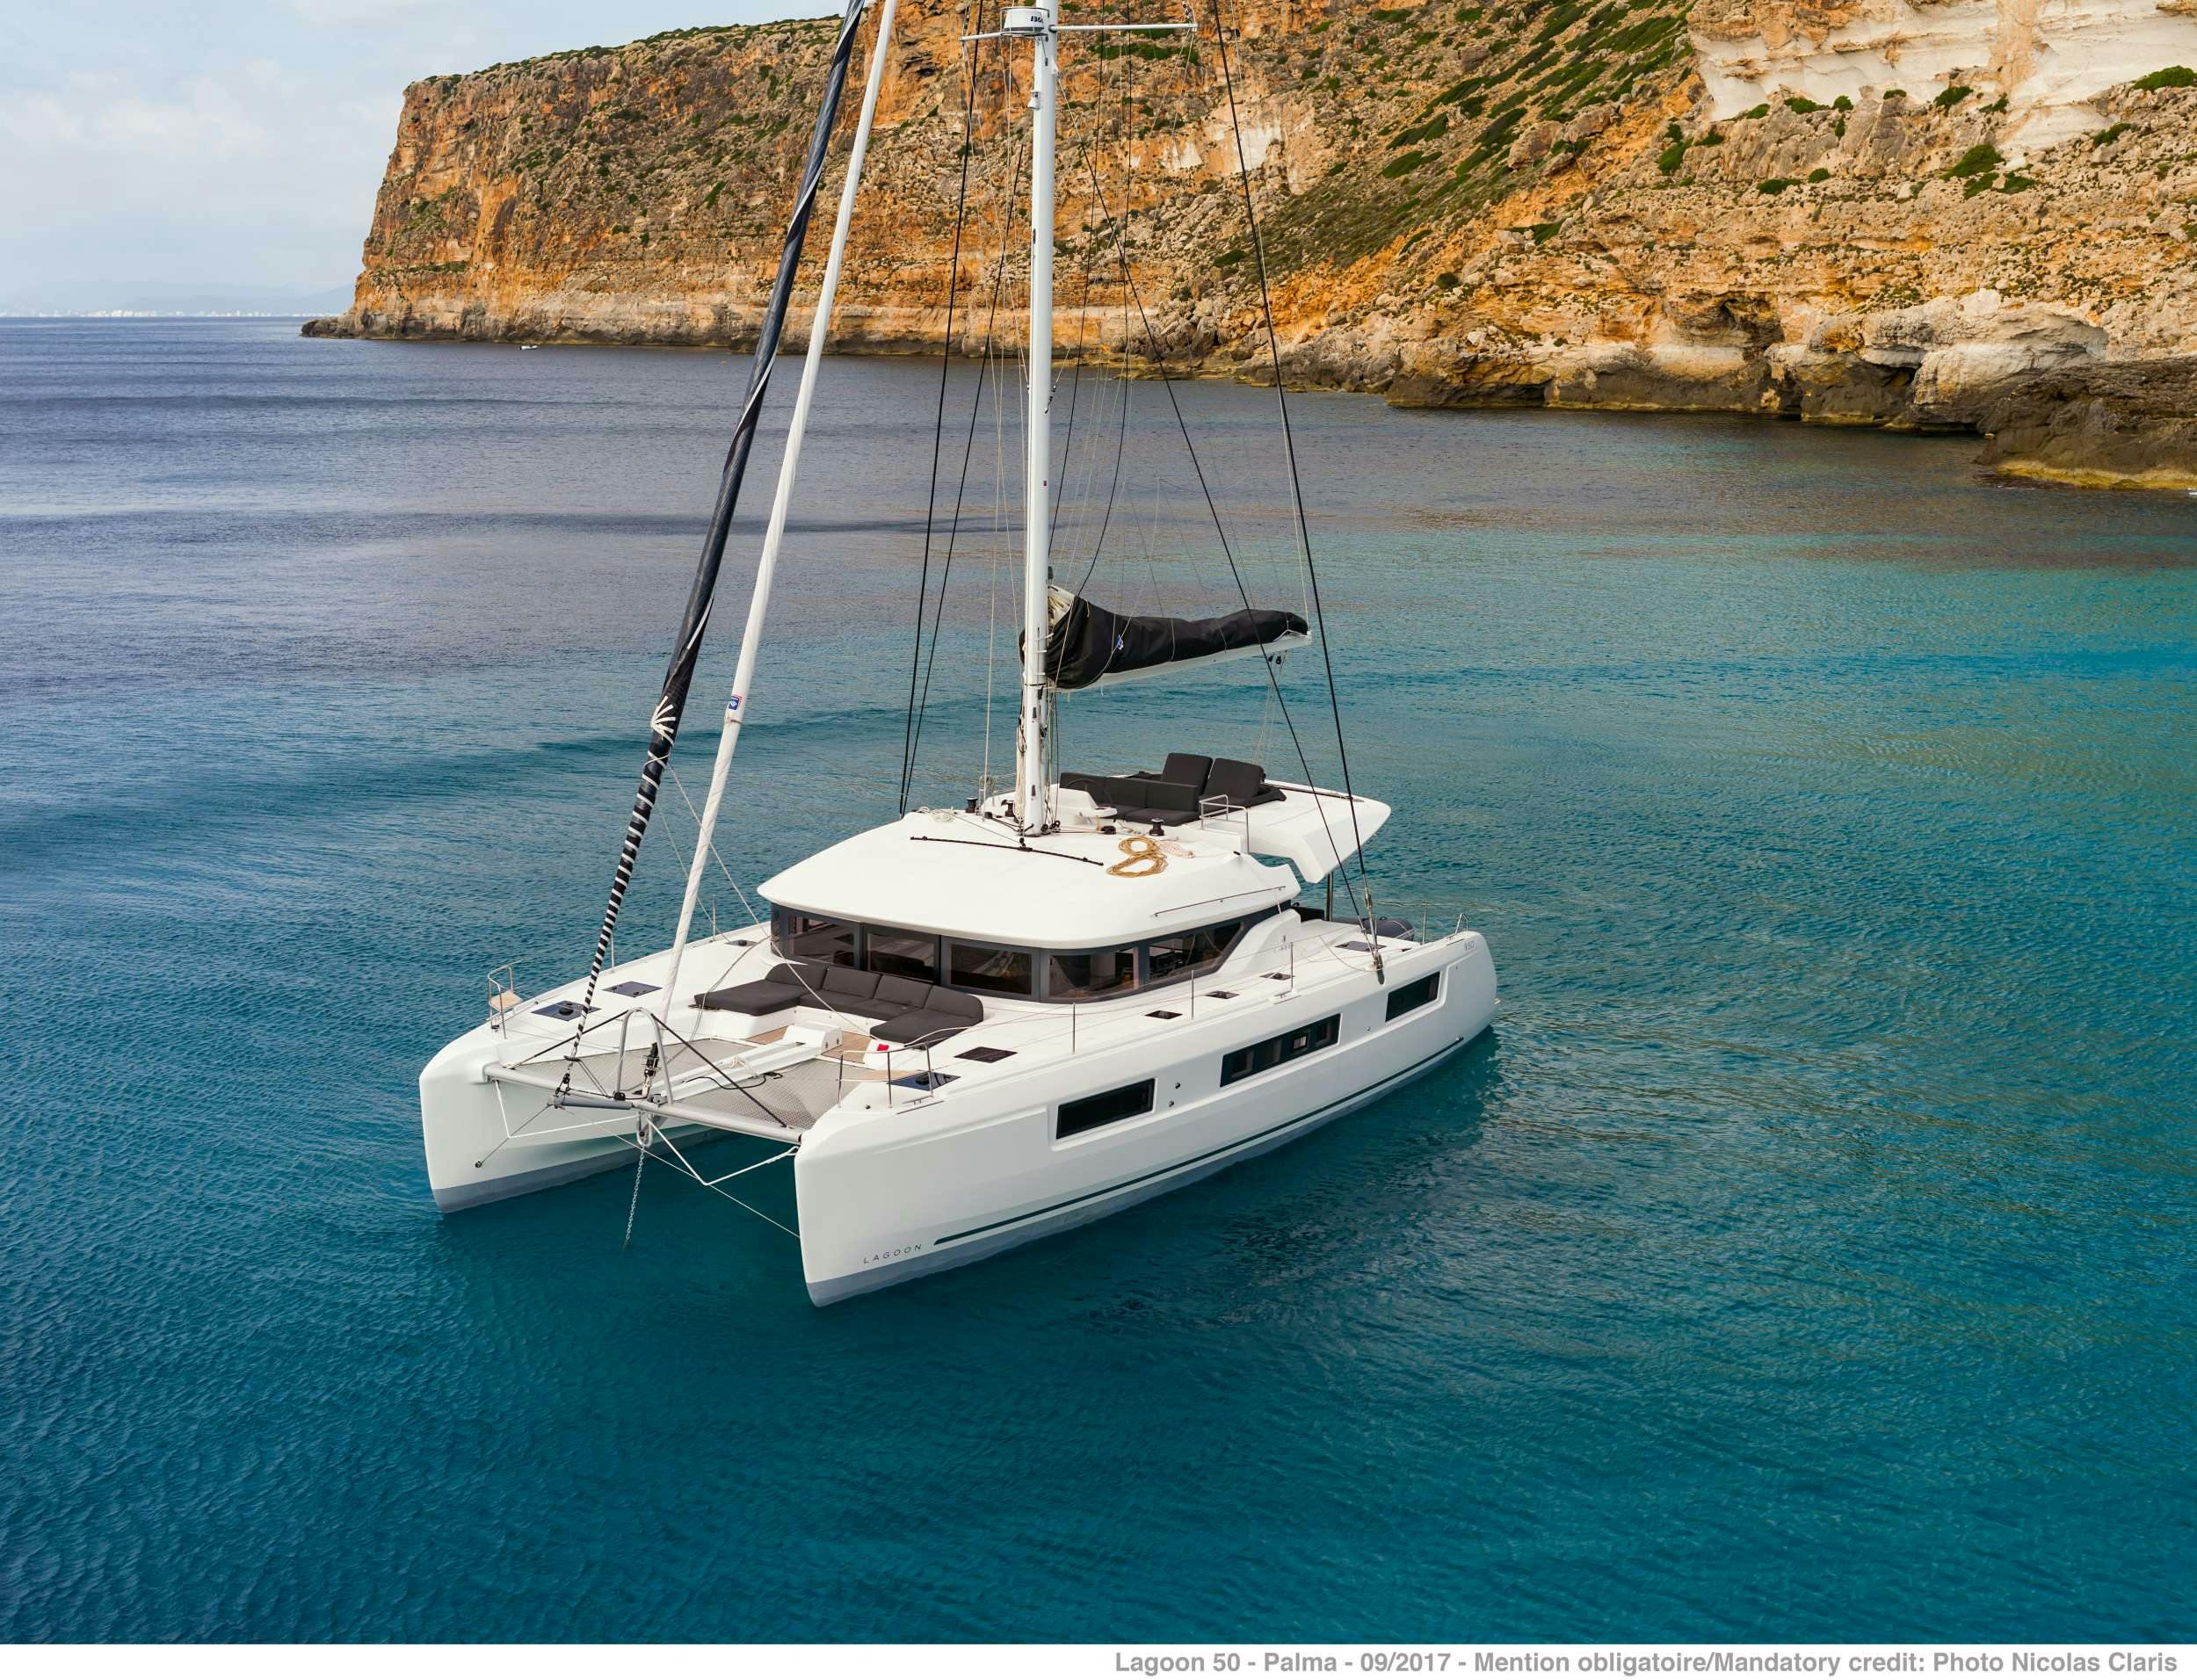 ONEIDA 2 - Catamaran Charter Greece & Boat hire in Greece 1